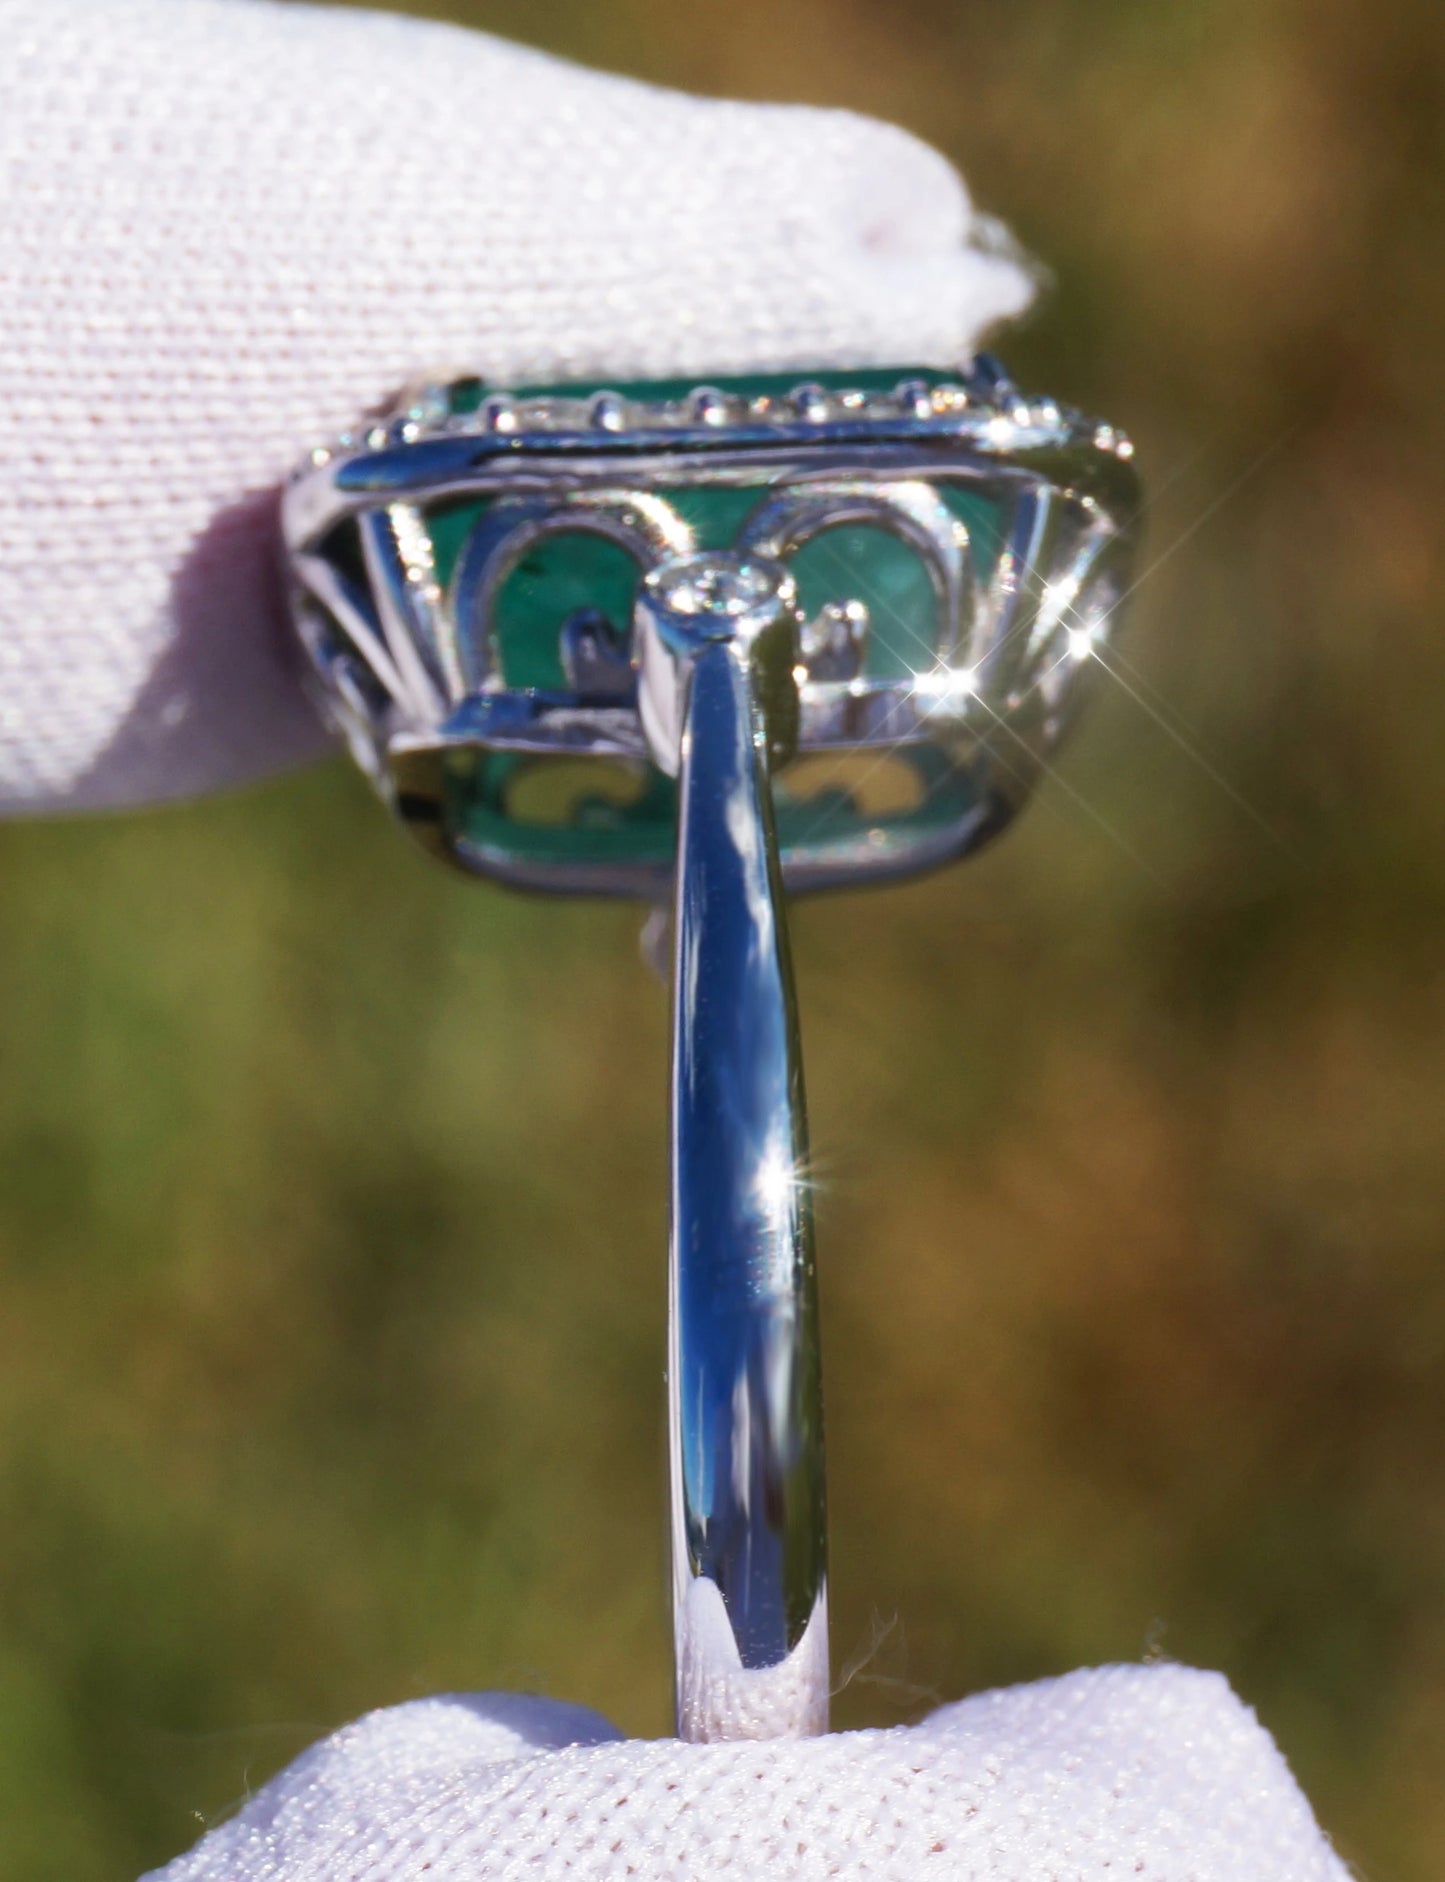 Emerald ring diamond gold white 14k gia certified 5.46ctw